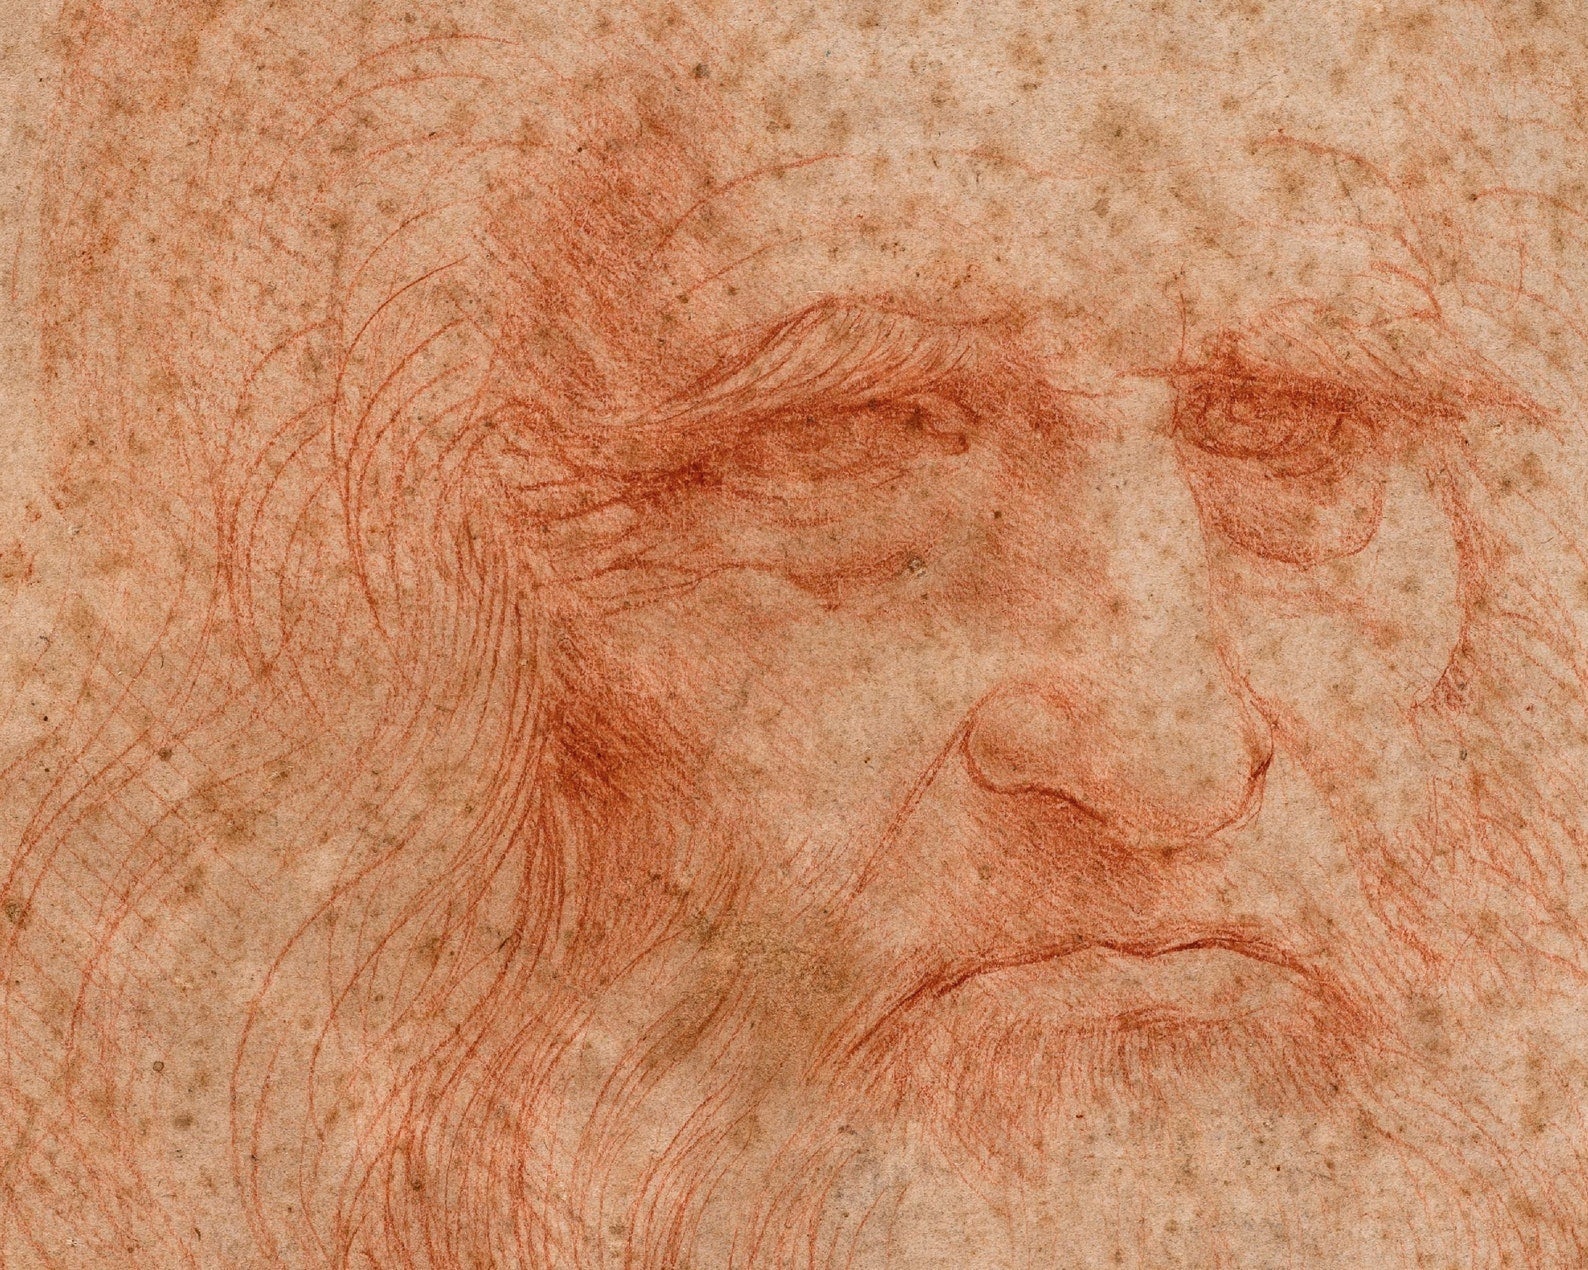 Leonardo da Vinci “Portrait of a Man in Red Chalk (Self Portrait)” (c.1510 - 1515) - Mabon Gallery